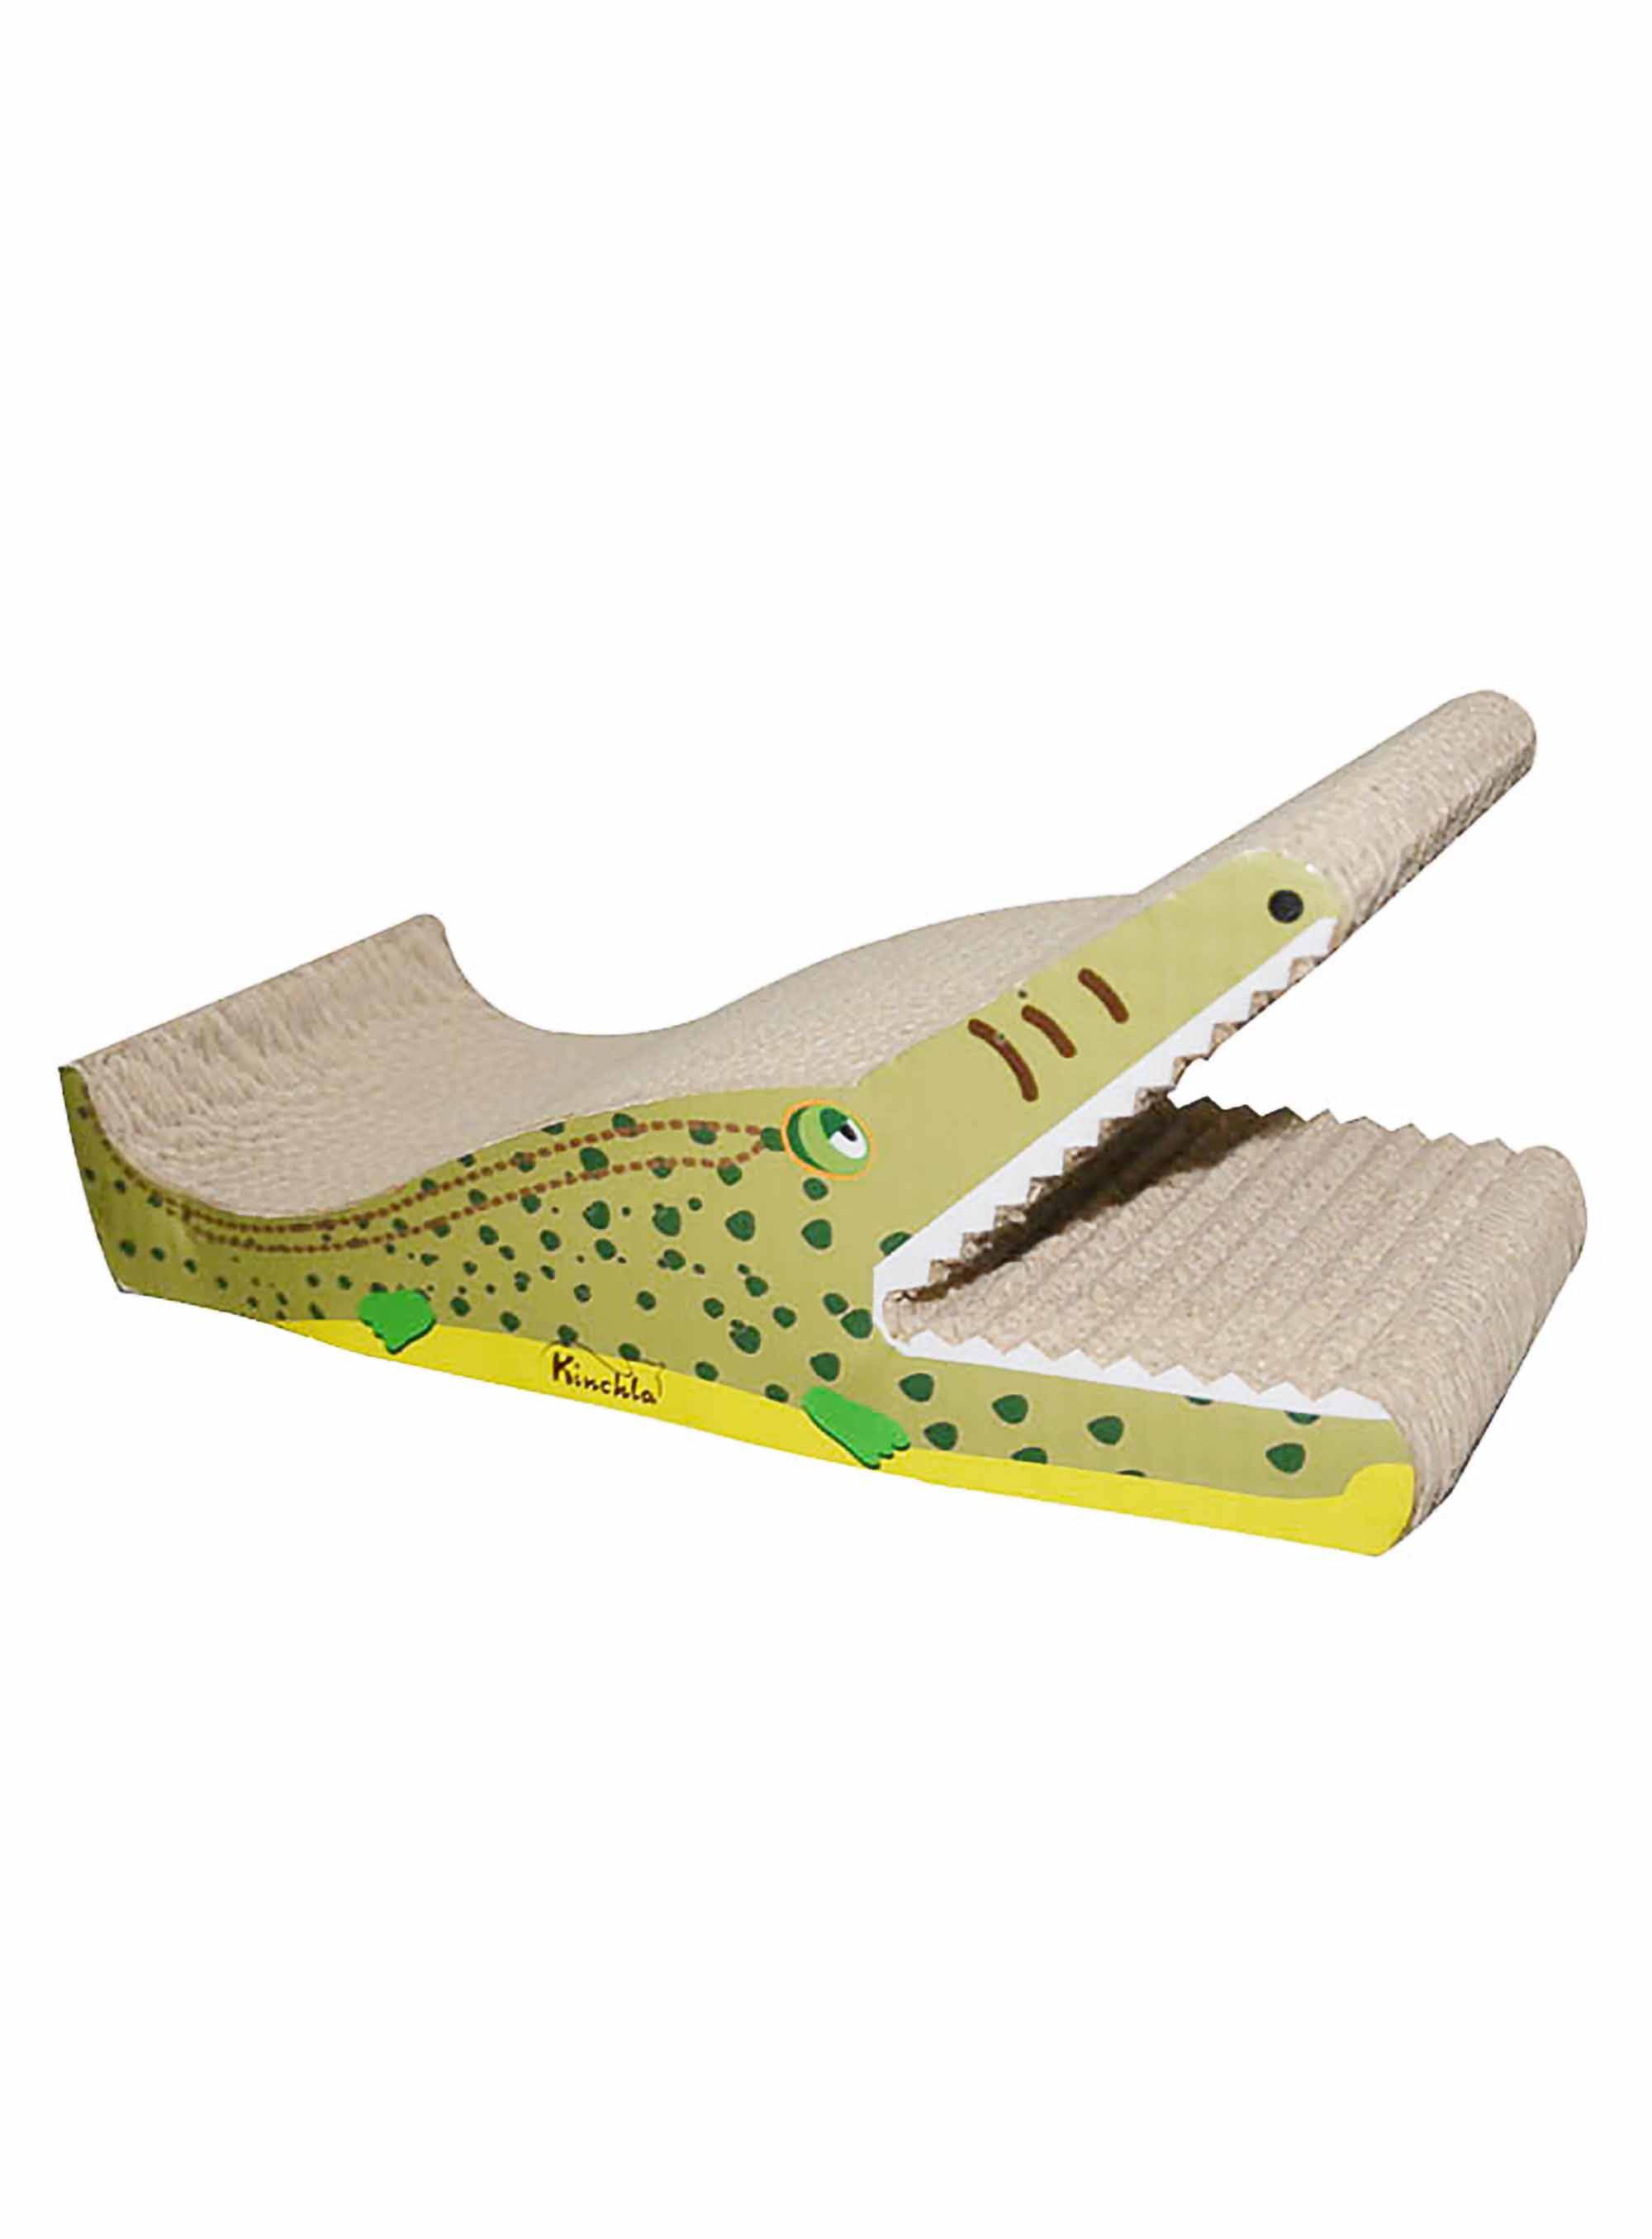 Wholesale Dealers of Cardboard Scratcher Cat -
 Crocodile Shape Cat Scratcher – YJ Display